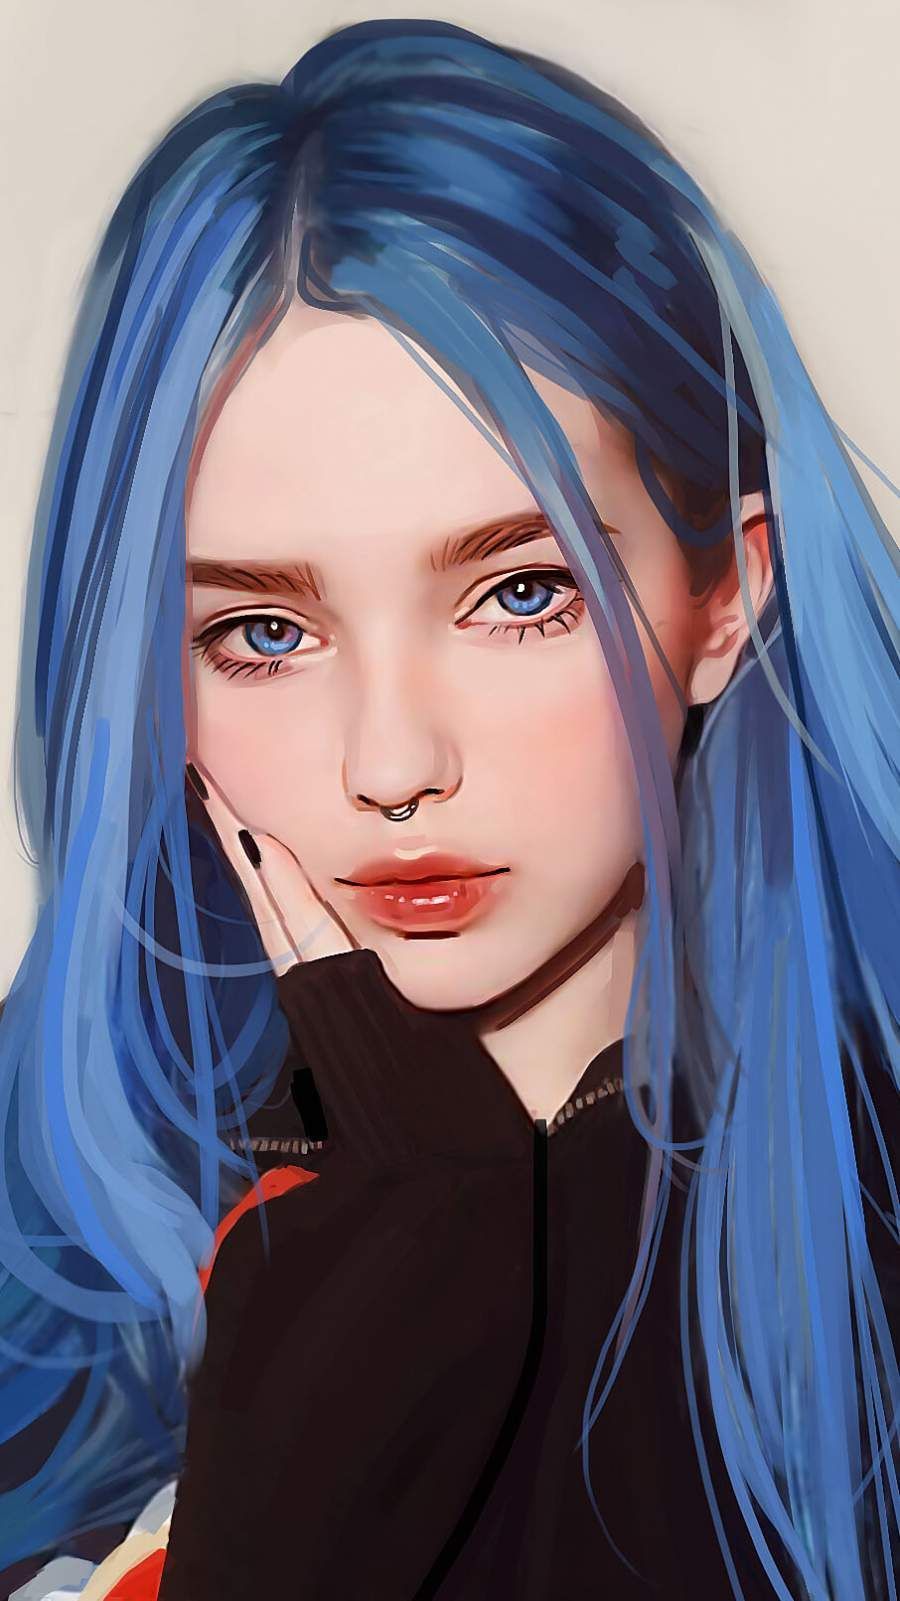 Girl Looksweater IPhone Wallpaper Wallpaper, IPhone Wallpaper. Girl Iphone Wallpaper, Blue Haired Girl, Cyberpunk Girl